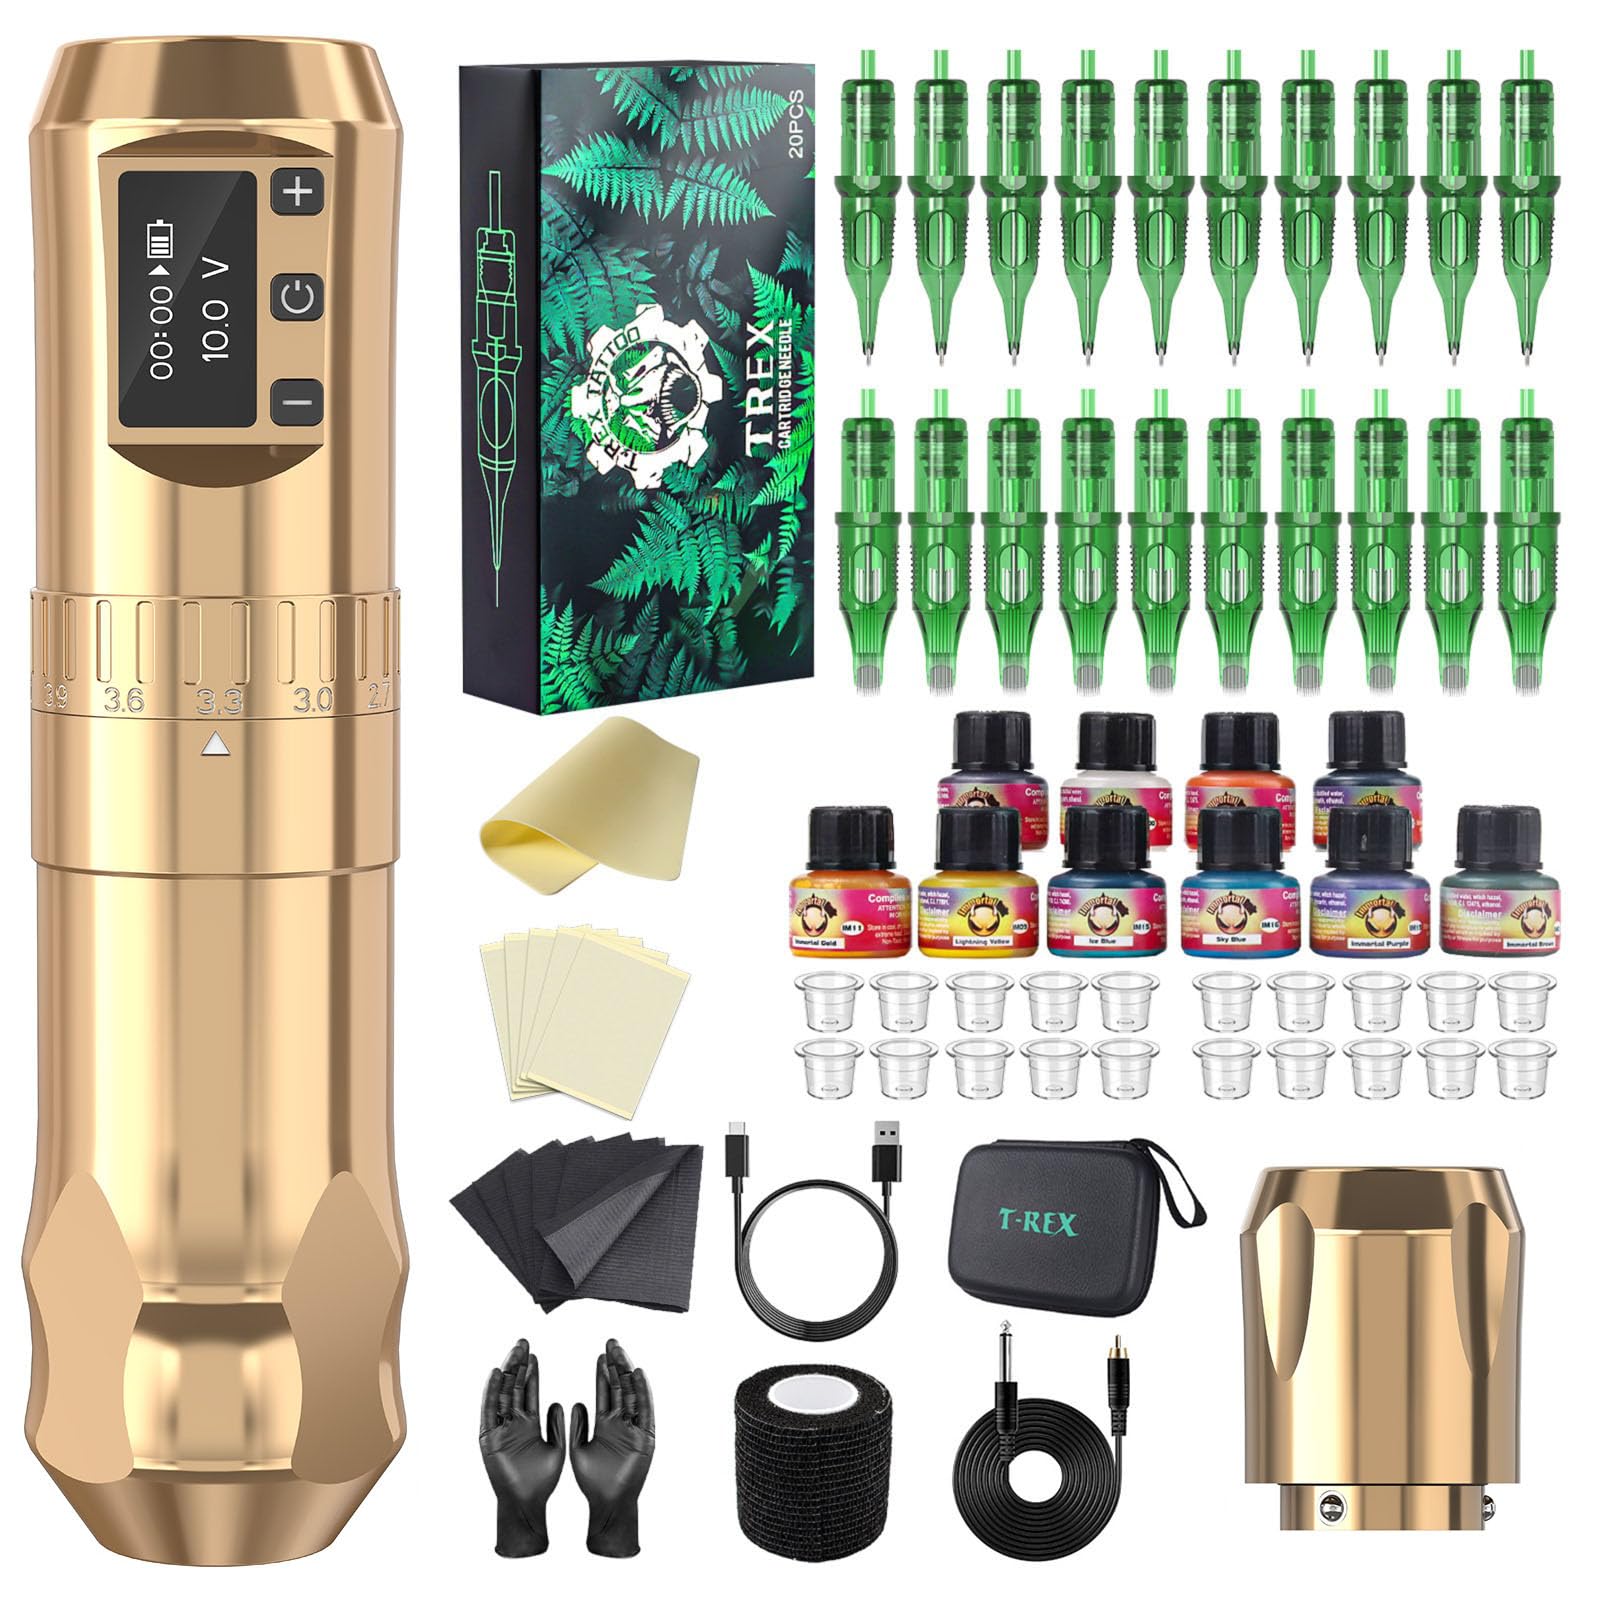 U-Rex Wireless Gold Tattoo Pen Machine Kit - 7 Length Adjustable Strokes